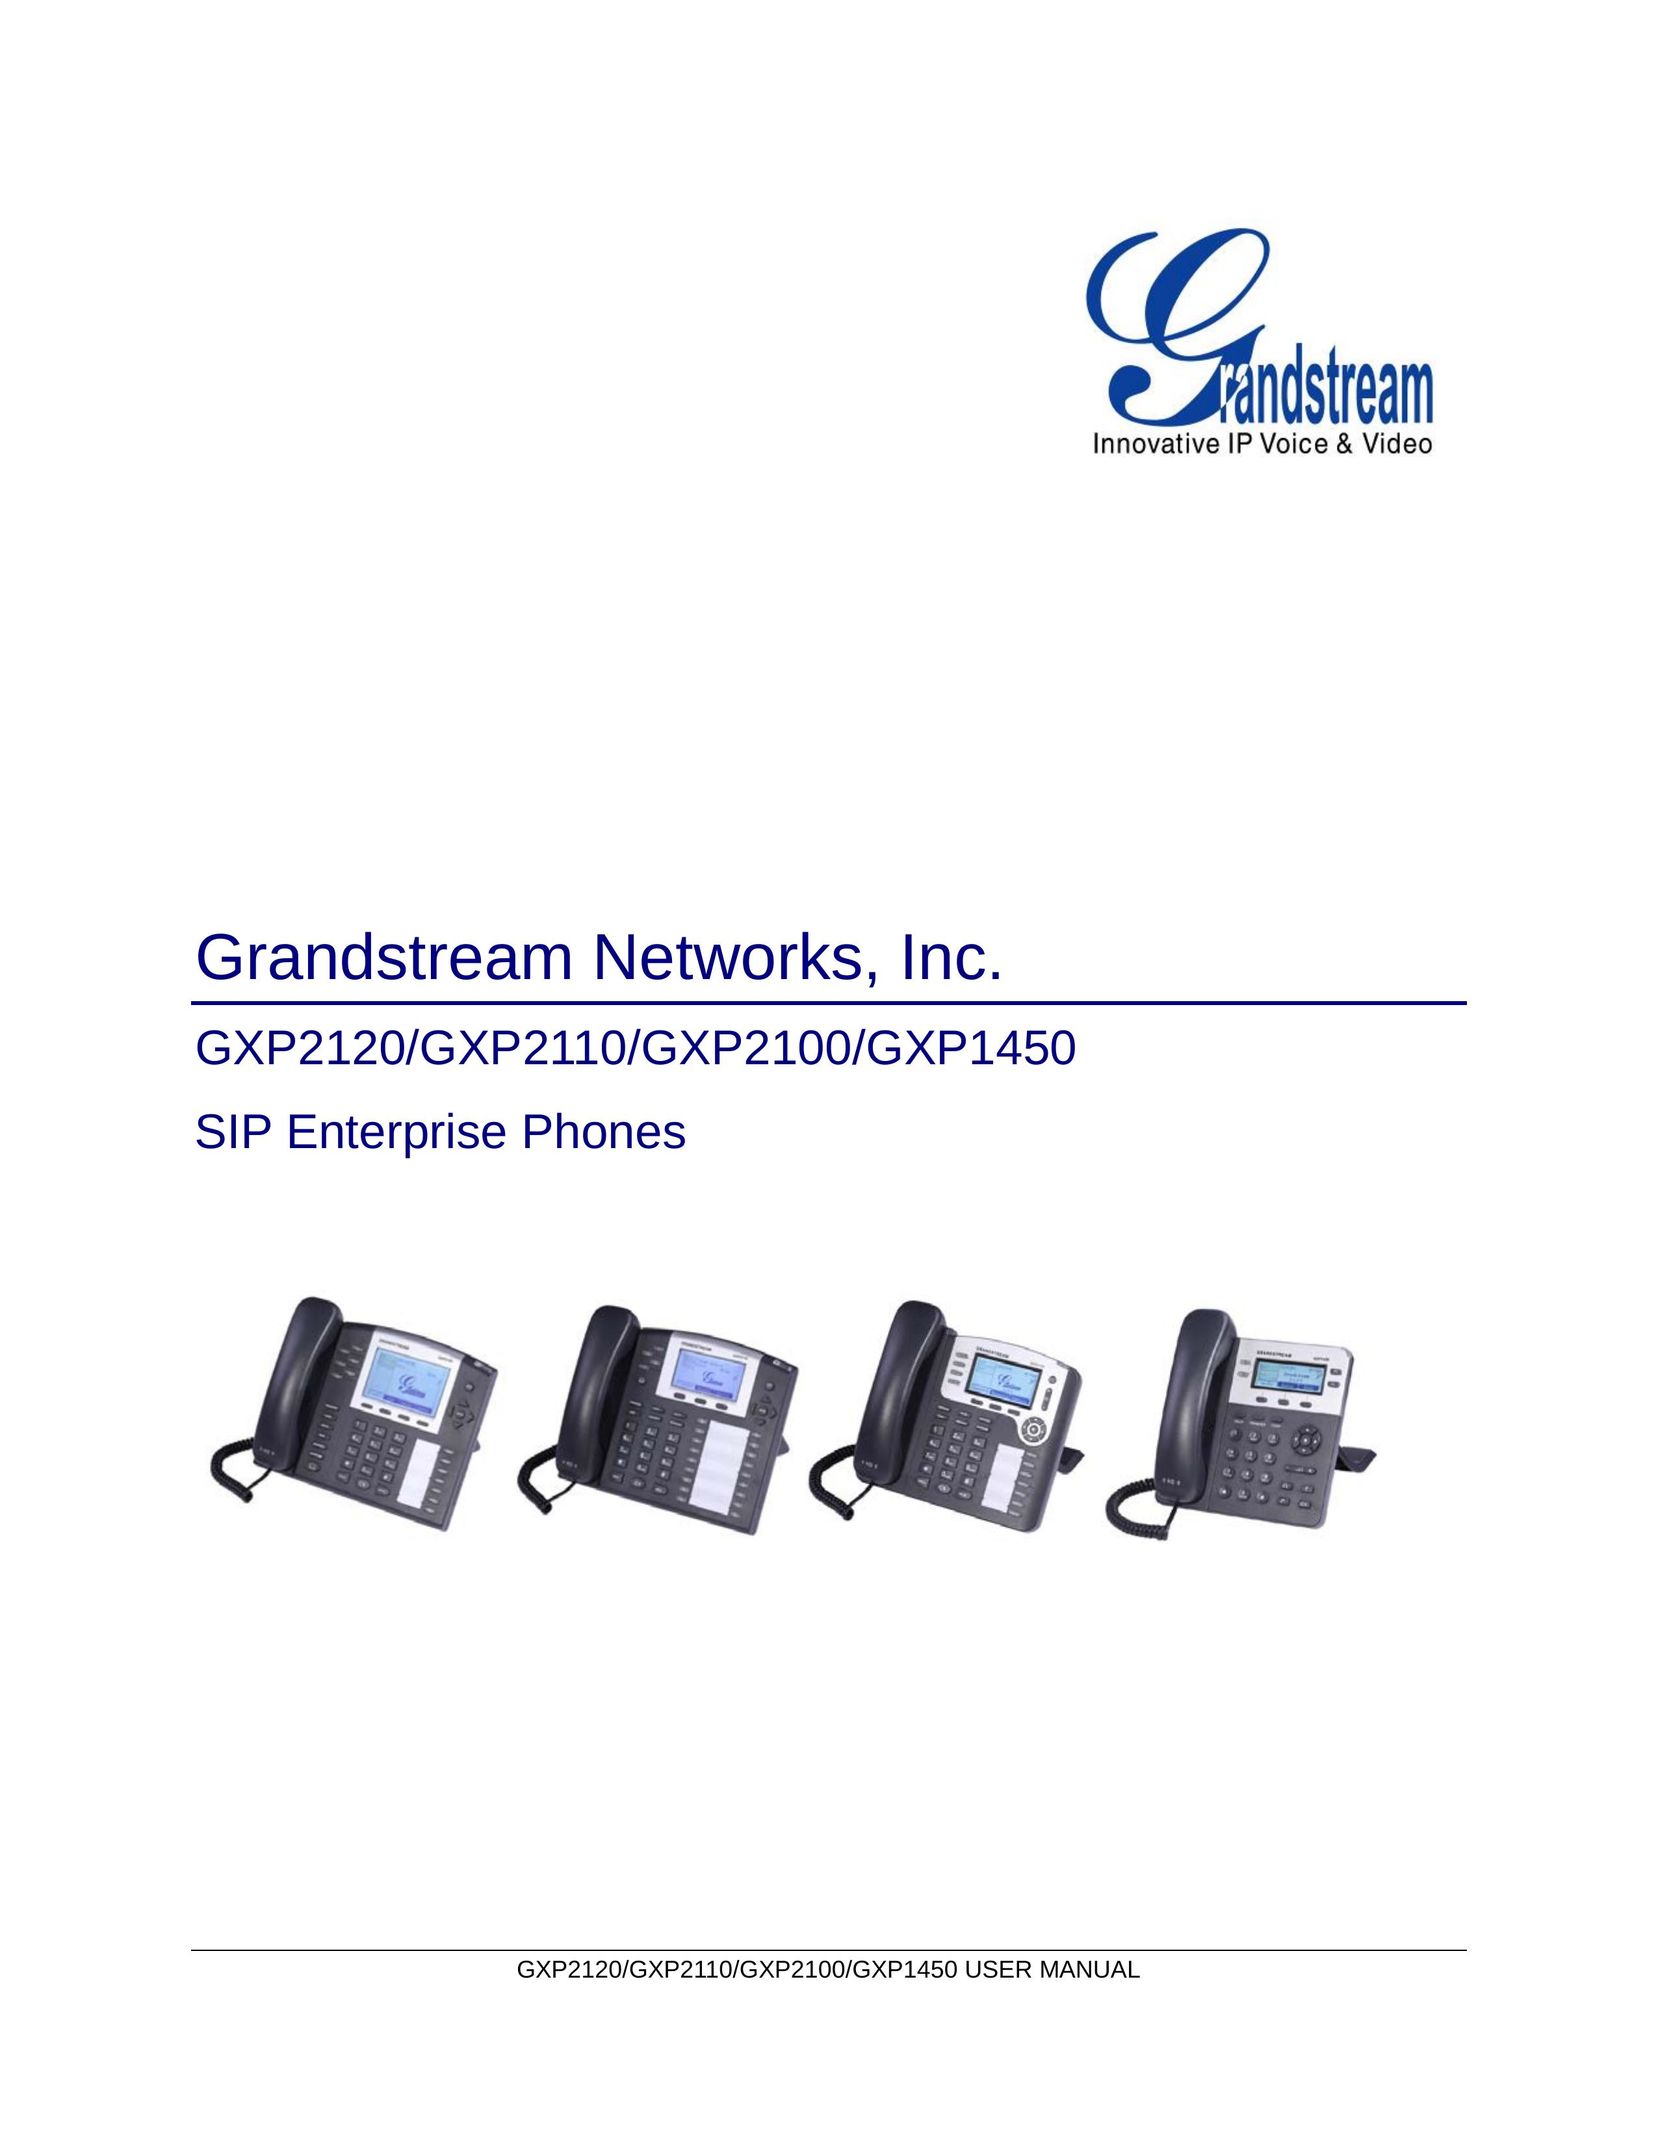 Grandstream Networks GXP2110 Telephone User Manual